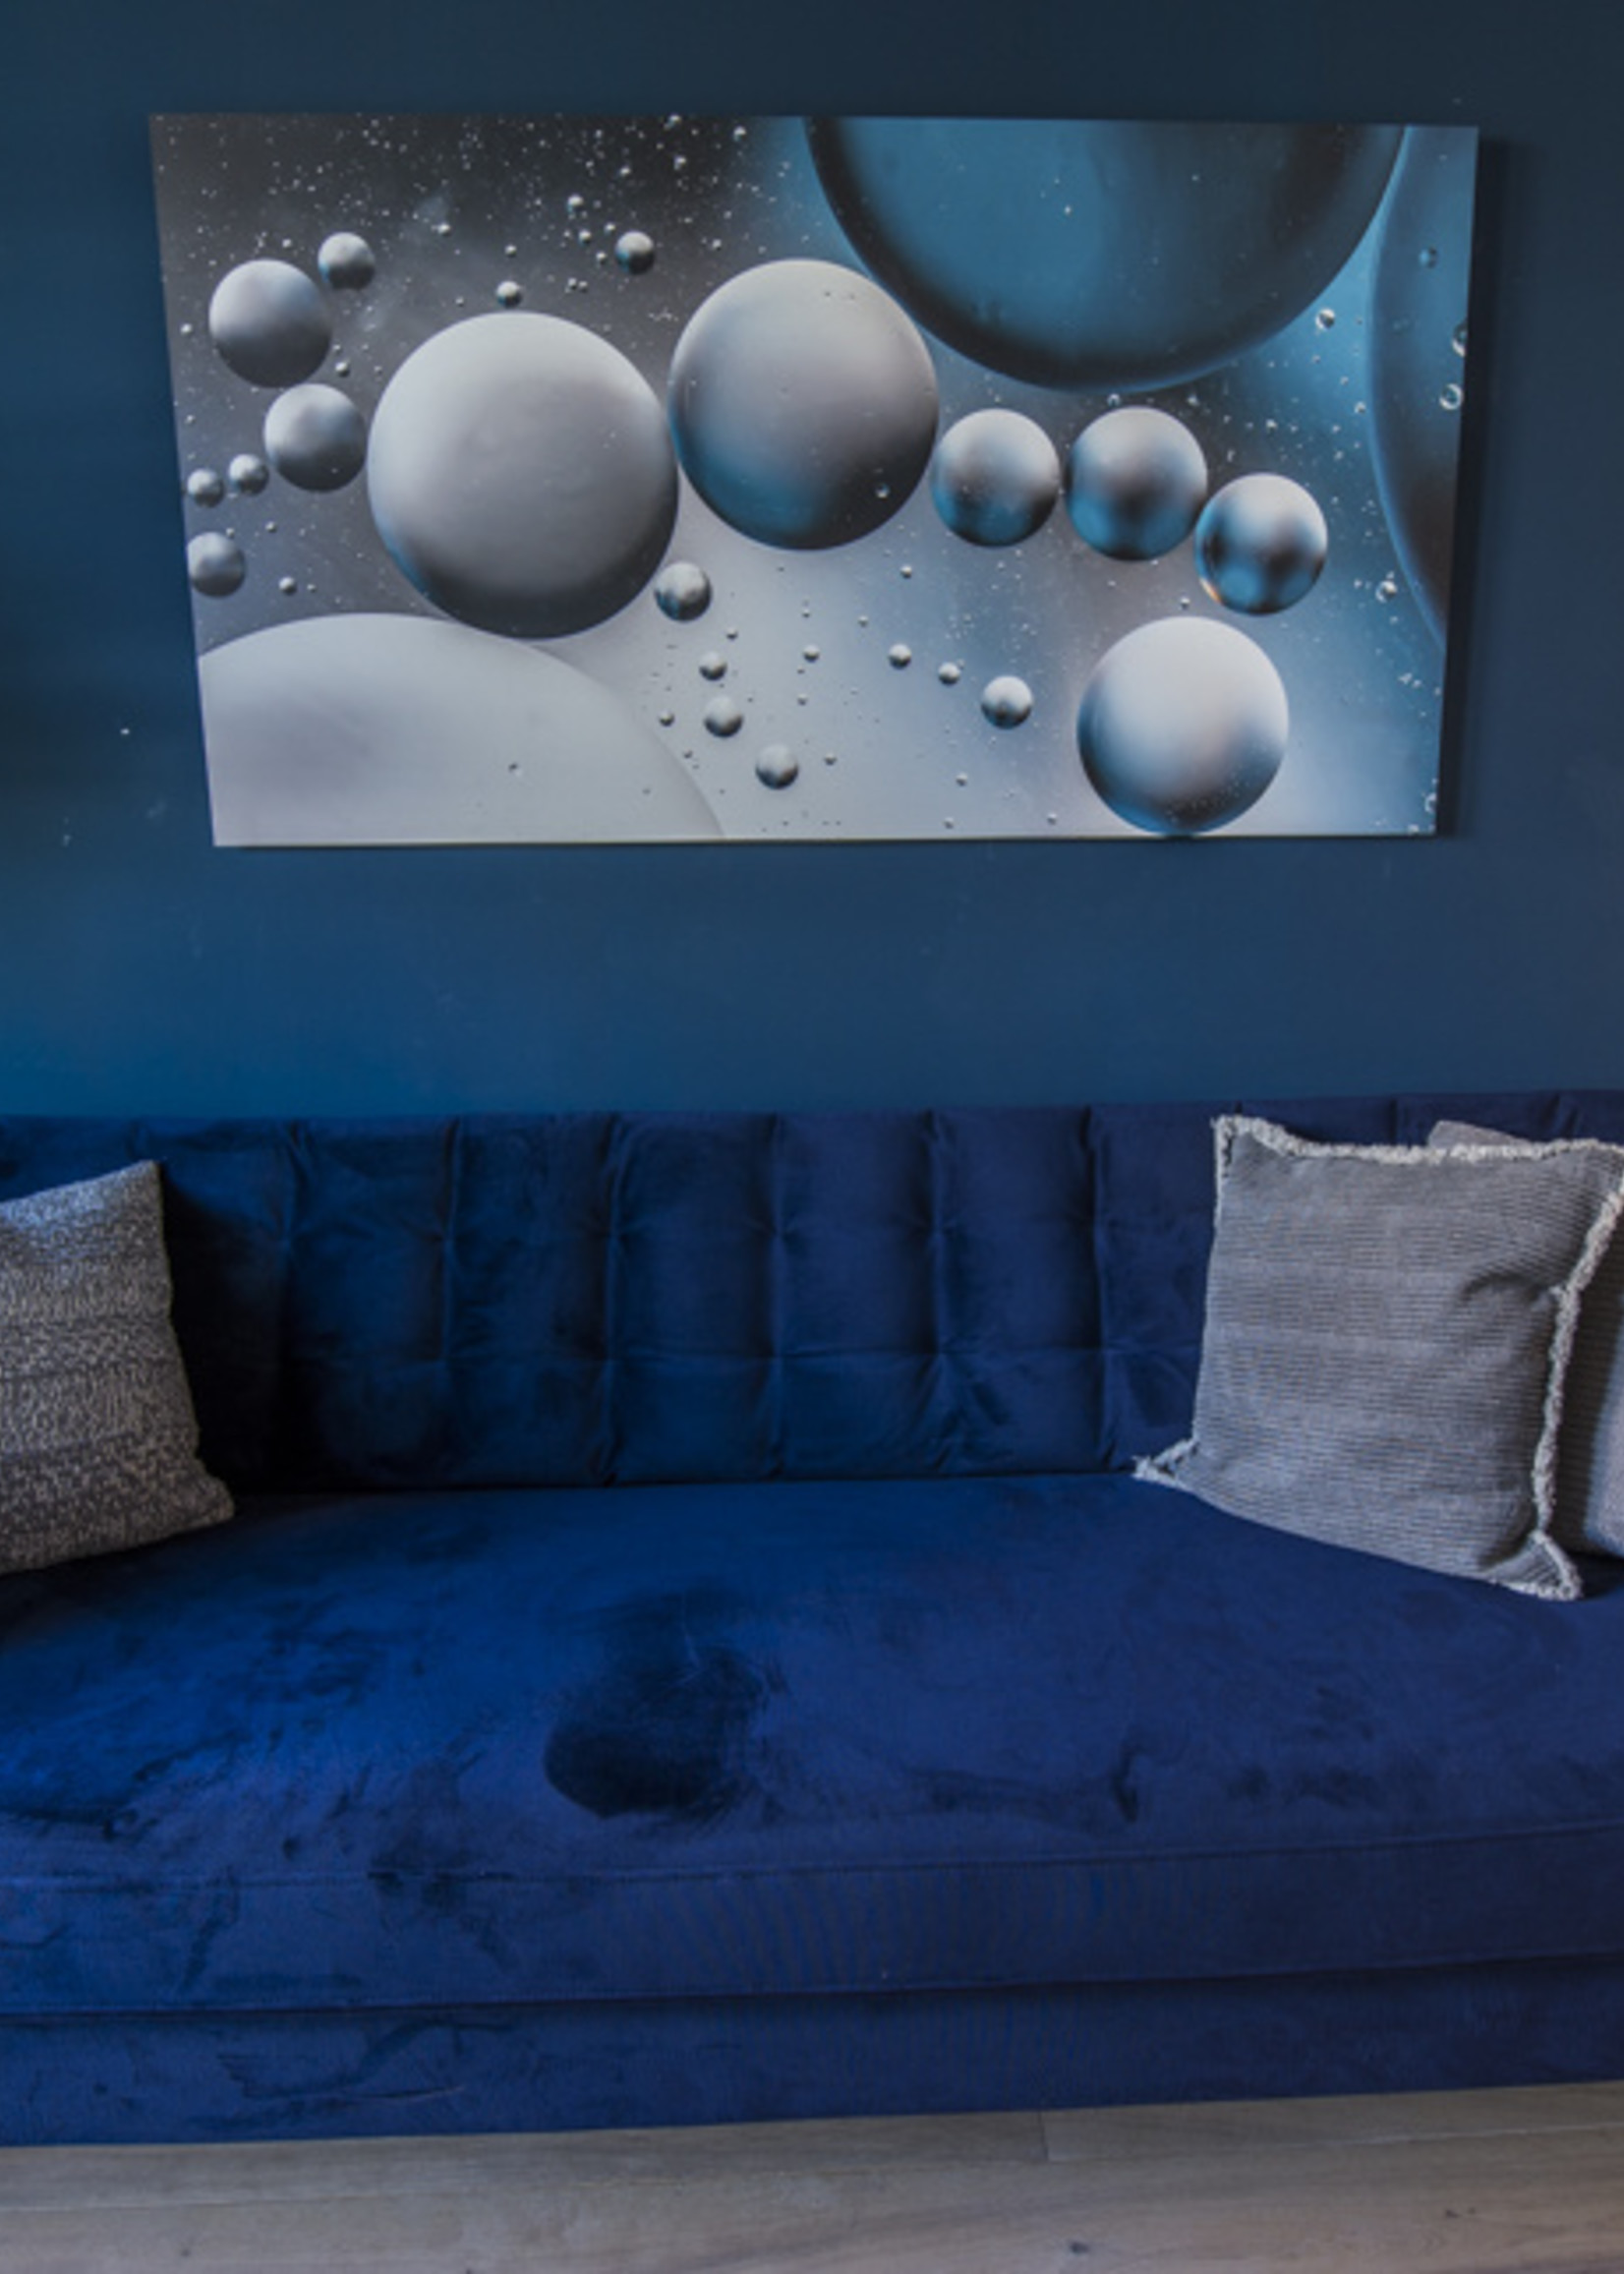 Frans van Steijn Wall photo "Bubble Art # 1" Aluminum on Dibond 120 cm